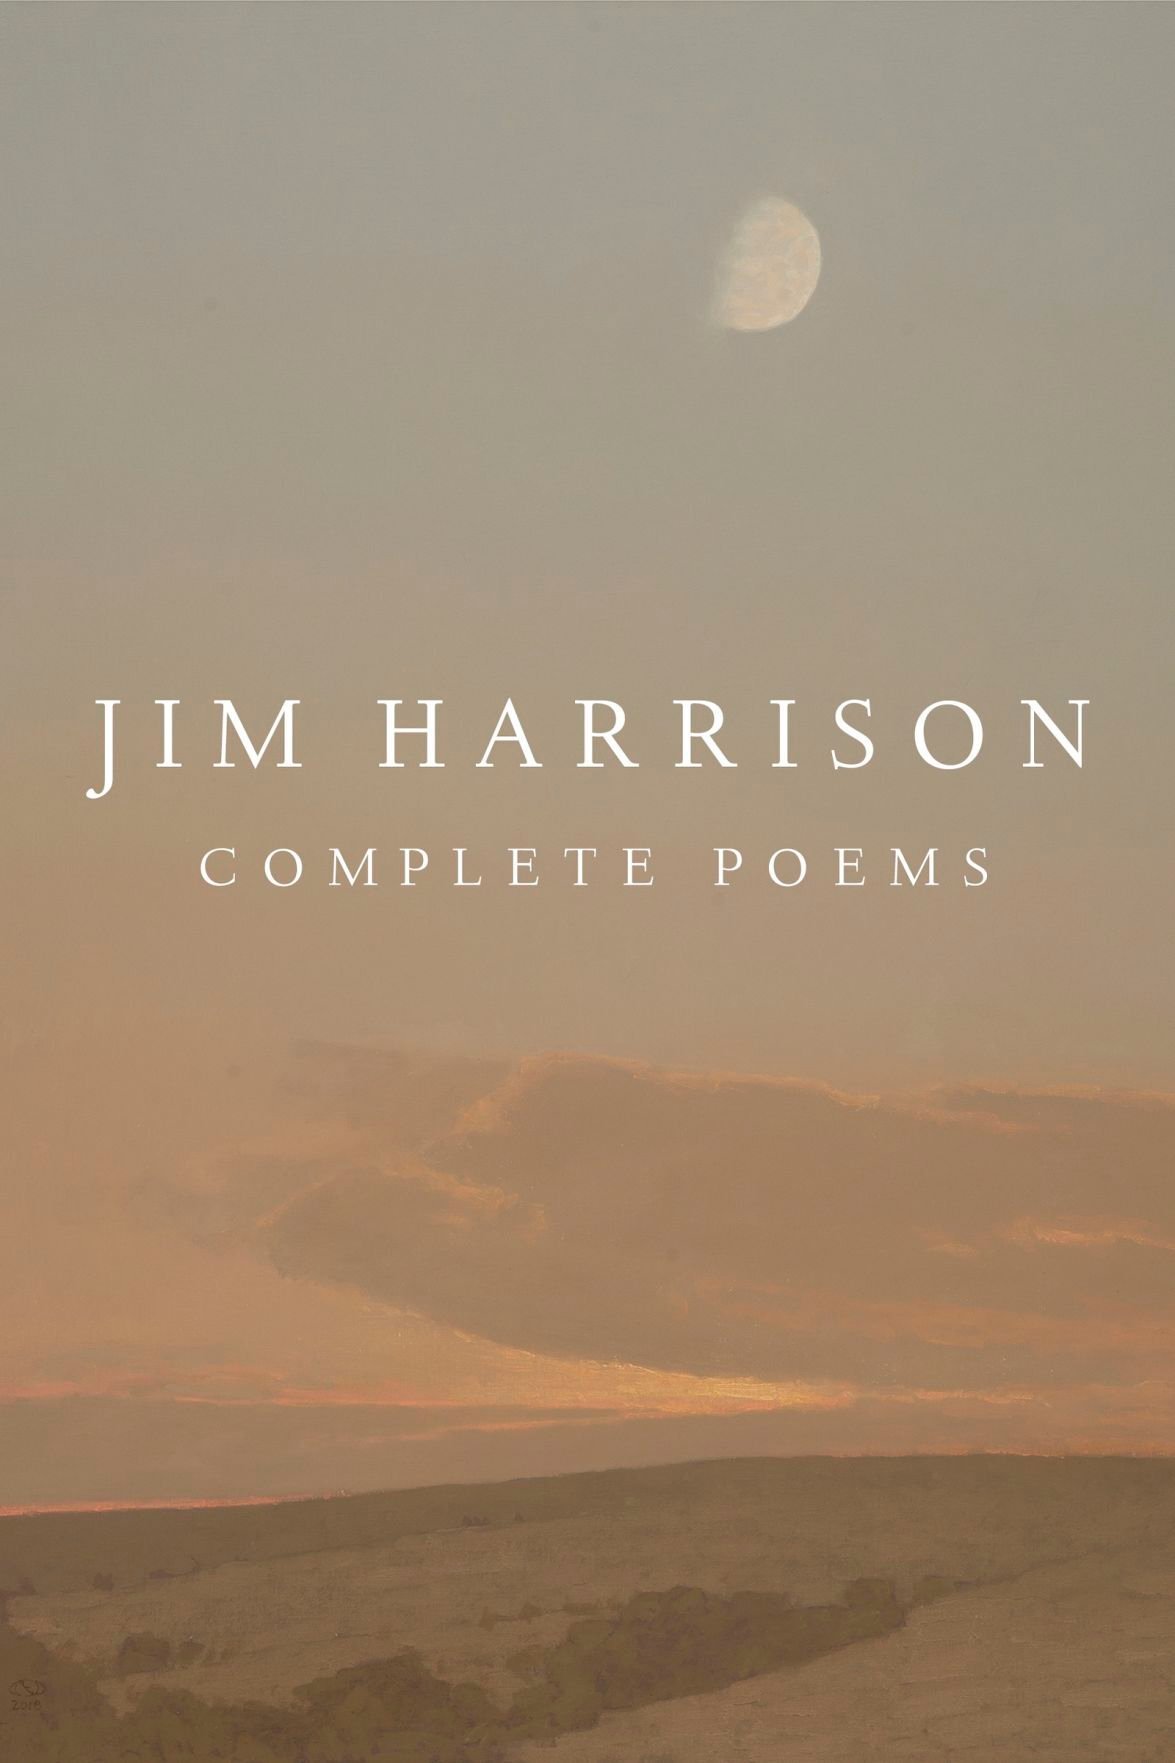 Jim Harrison